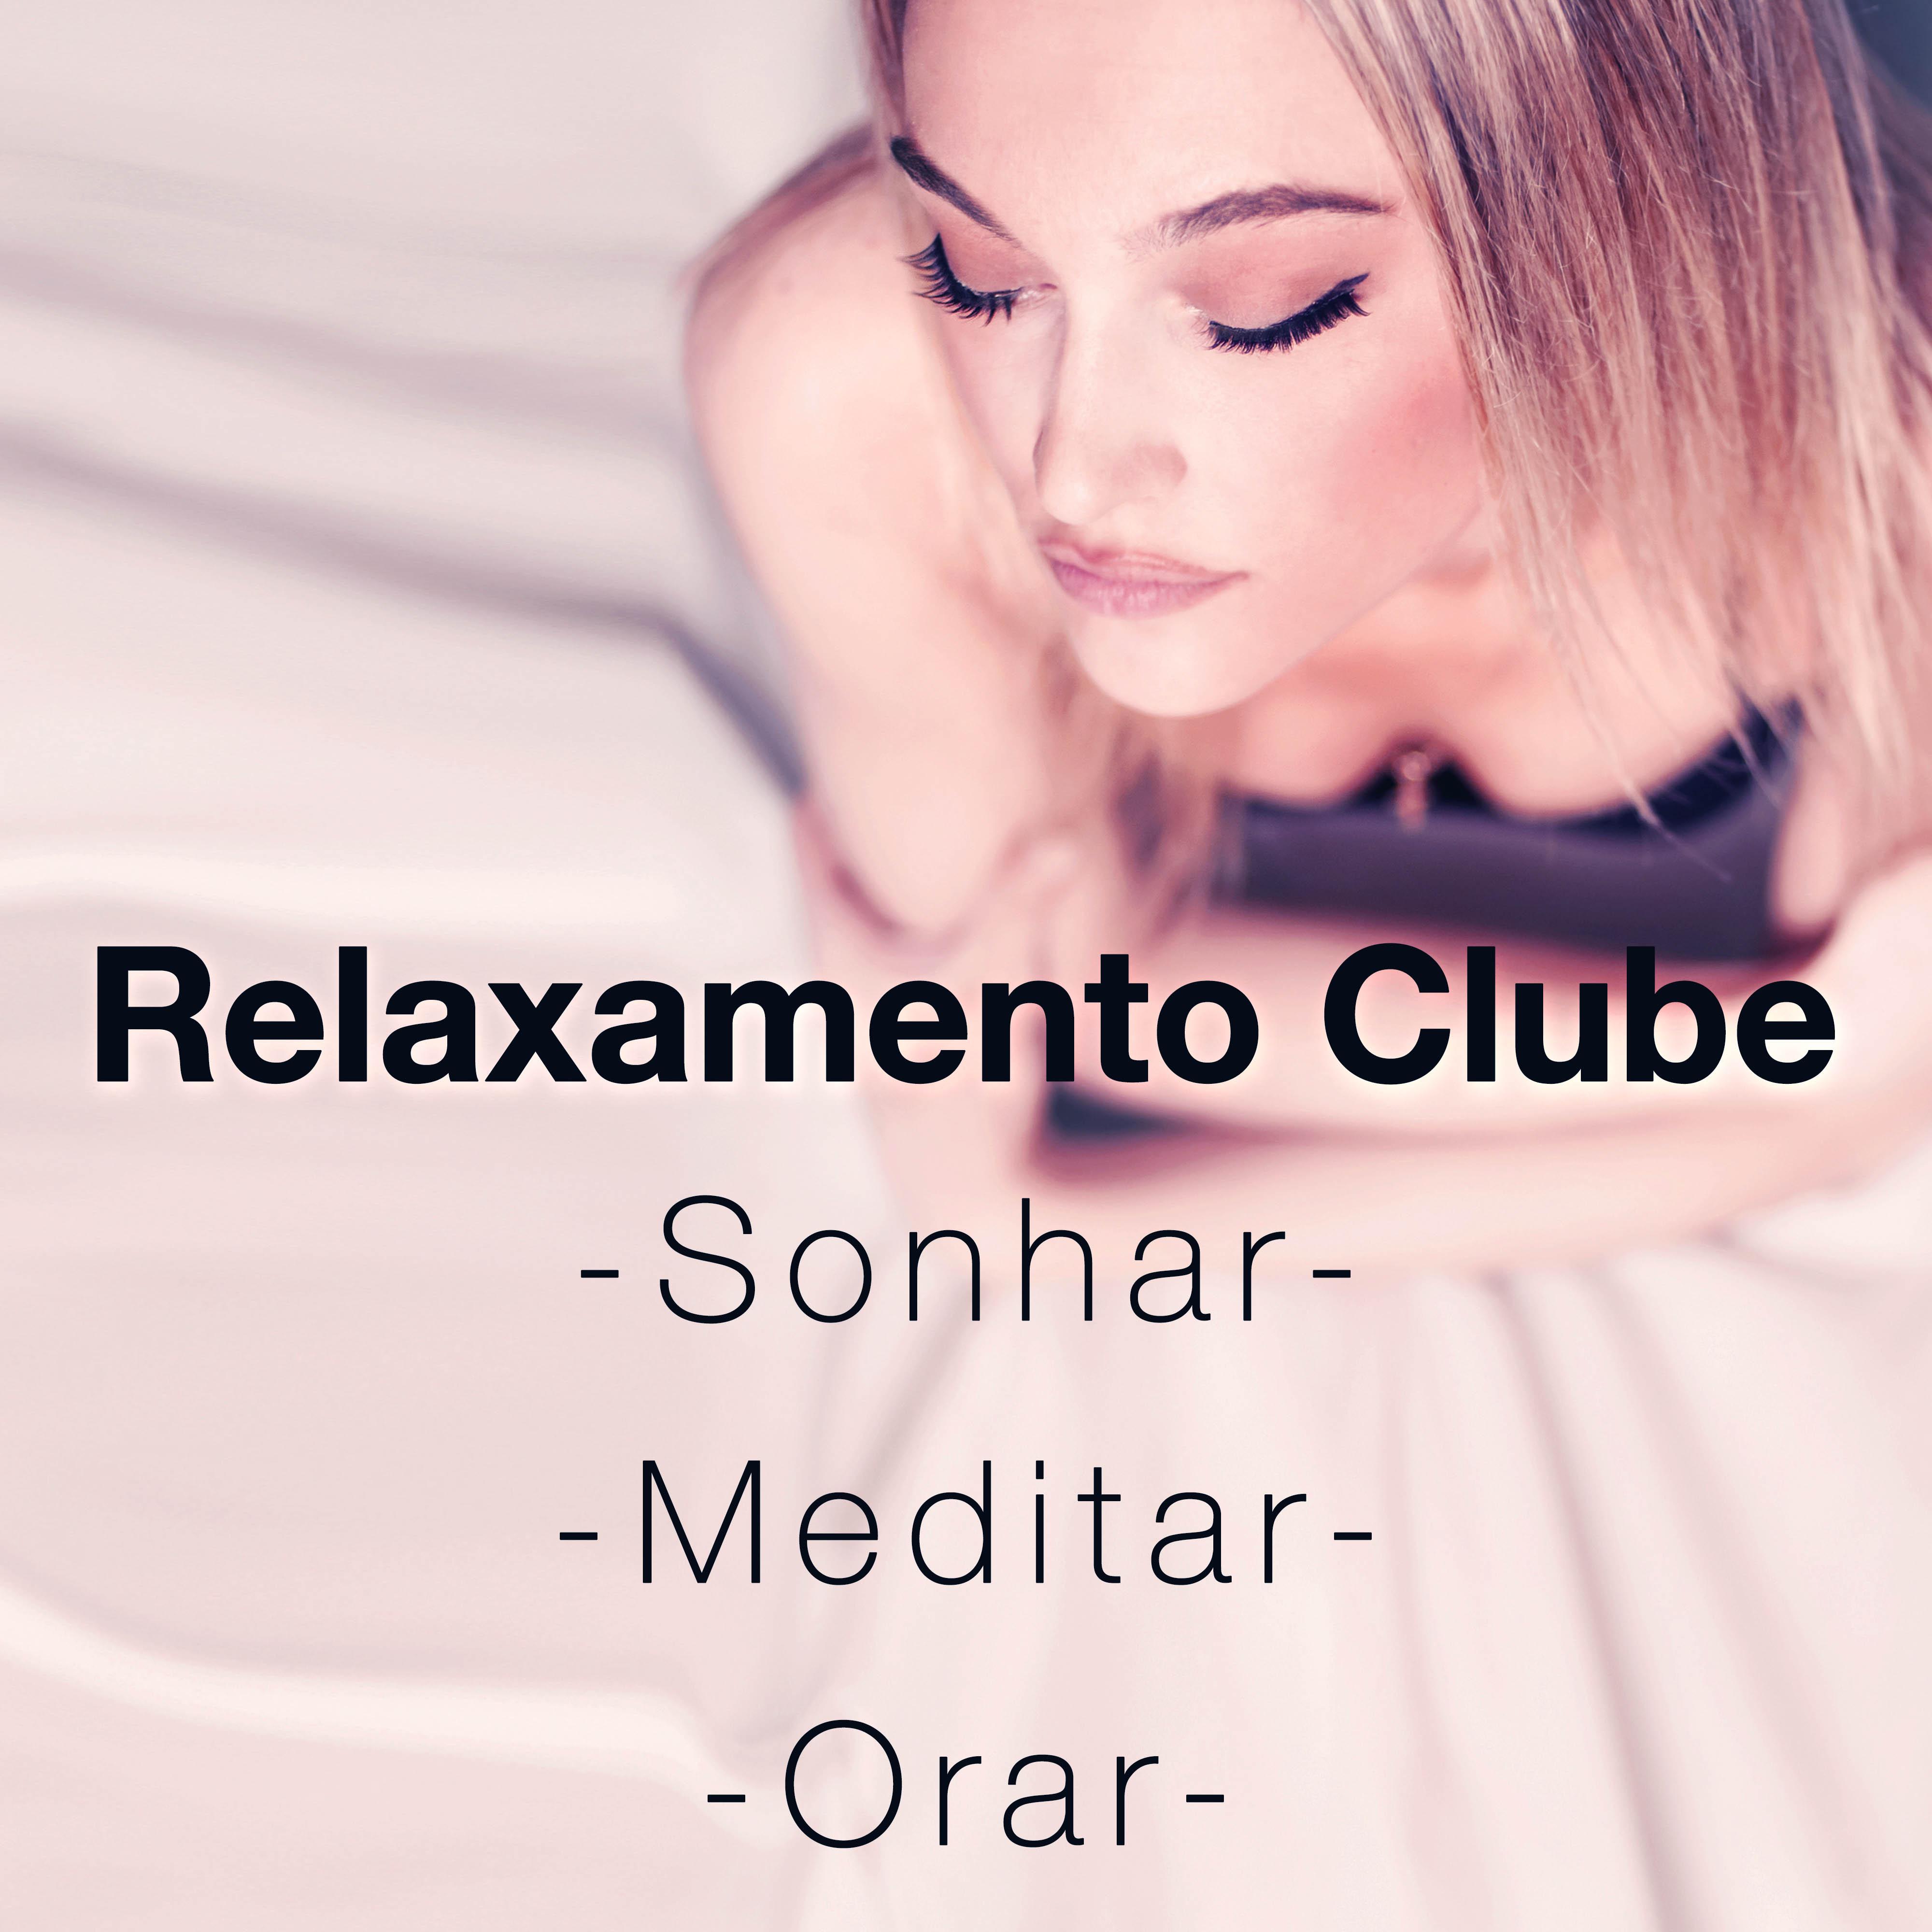 Relaxamento Clube - Música para Sonhar, Meditar, Orar y  para a Paz Interior